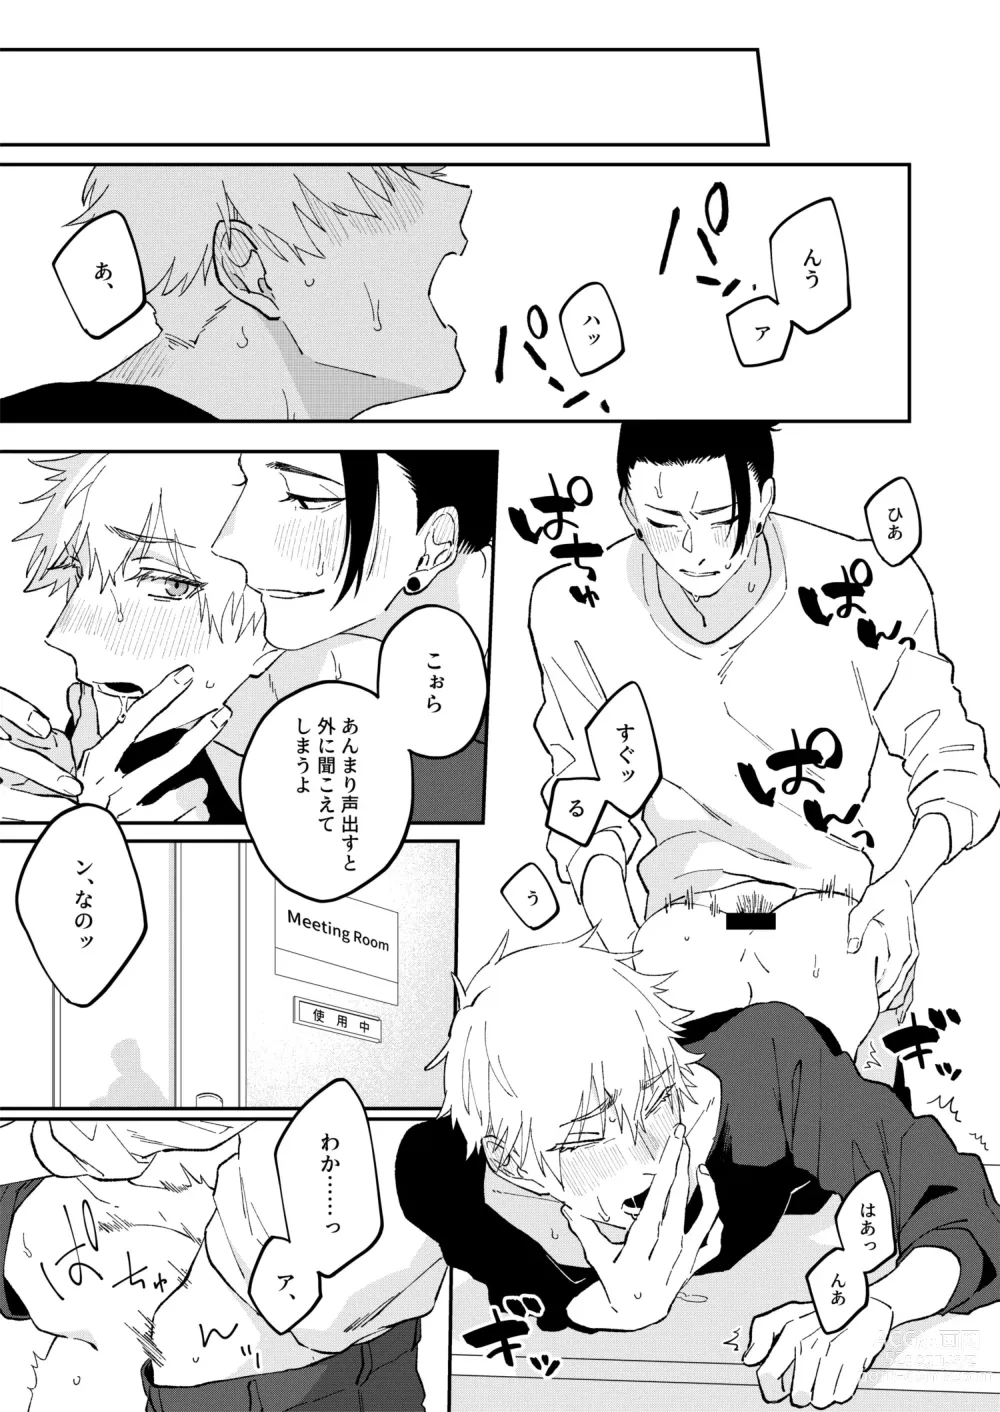 Page 23 of doujinshi GeGo wa Genjitsu nanode Scandal NG desu!!!